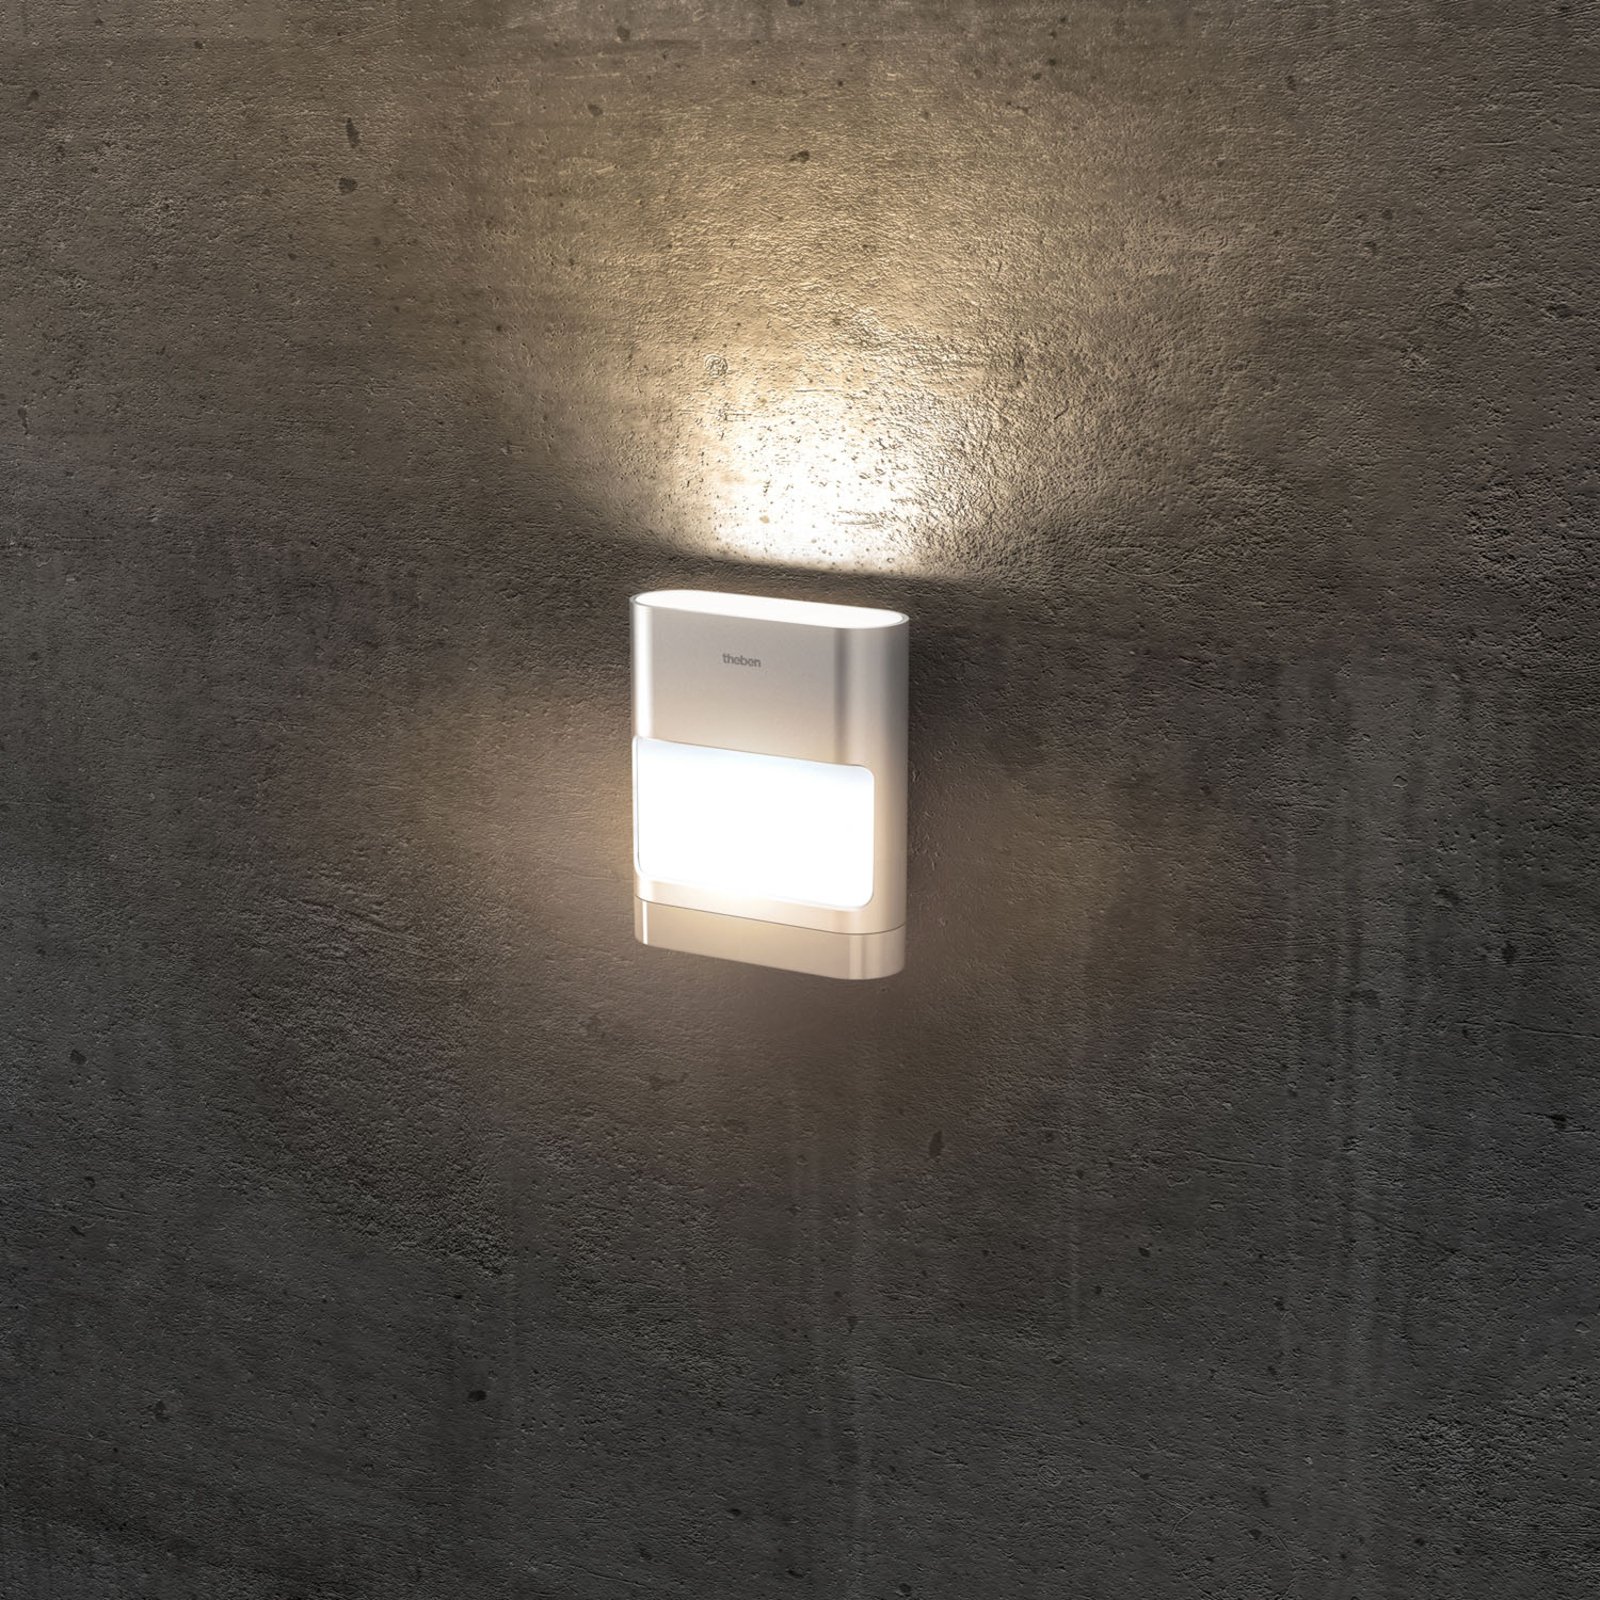 Theben theLeda D SU AL wall light PIR sensor